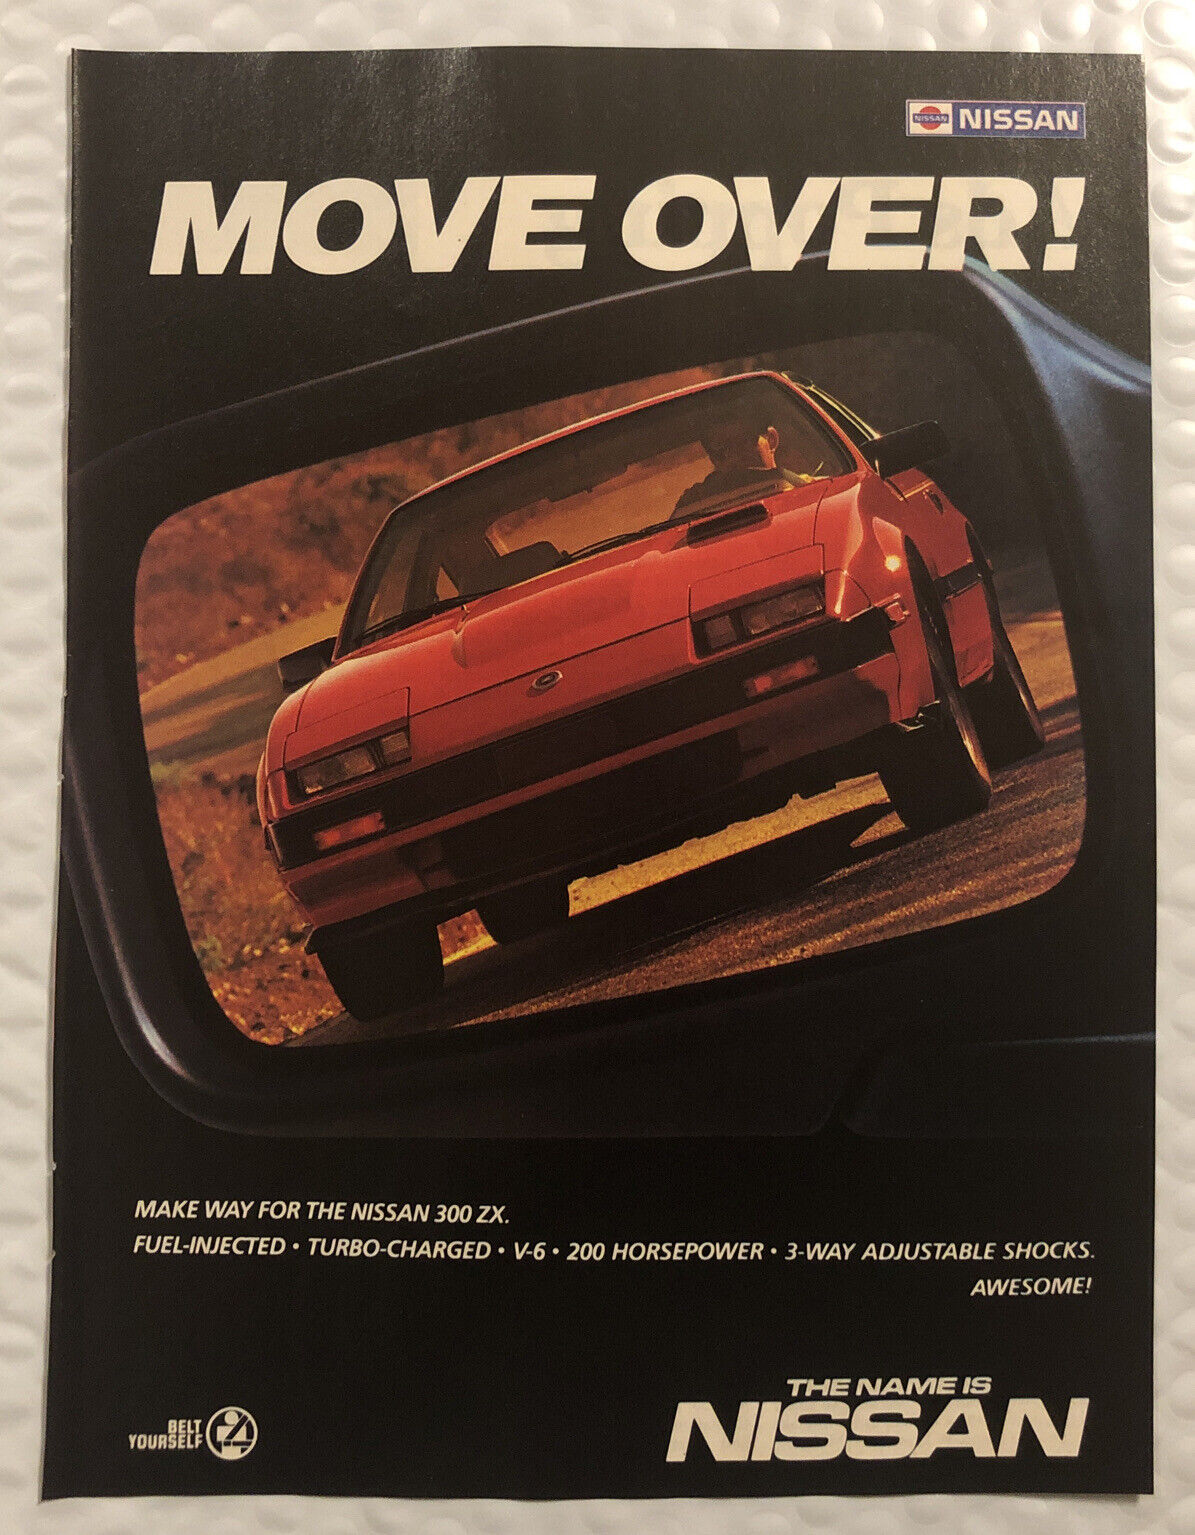 Vintage 1985 Nissan 300 ZX Automobile Original Print Ad - Move Over